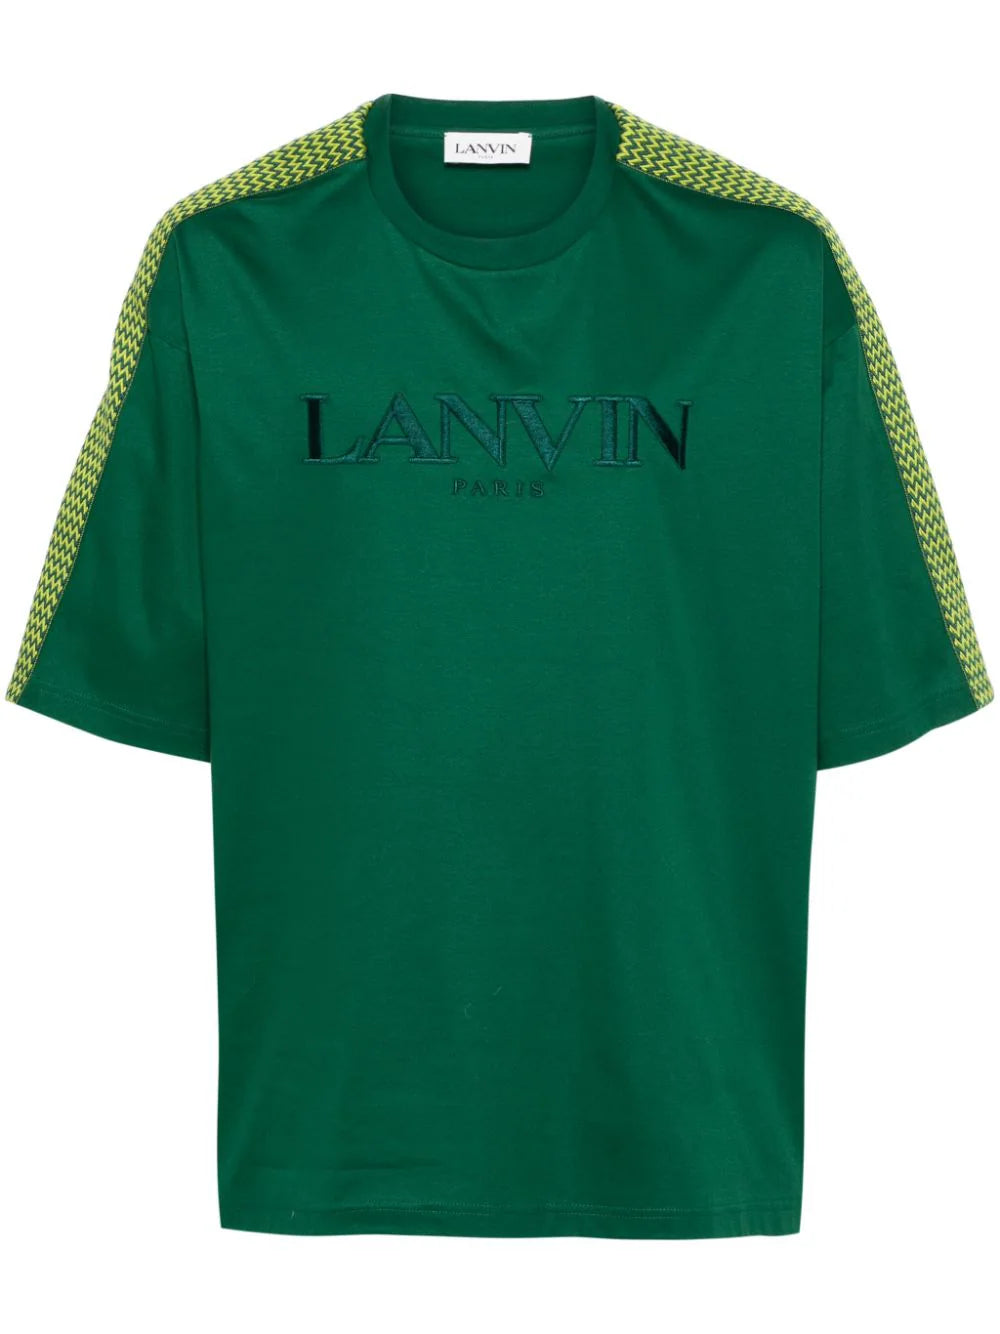 Lanvin Curb T-Shirt